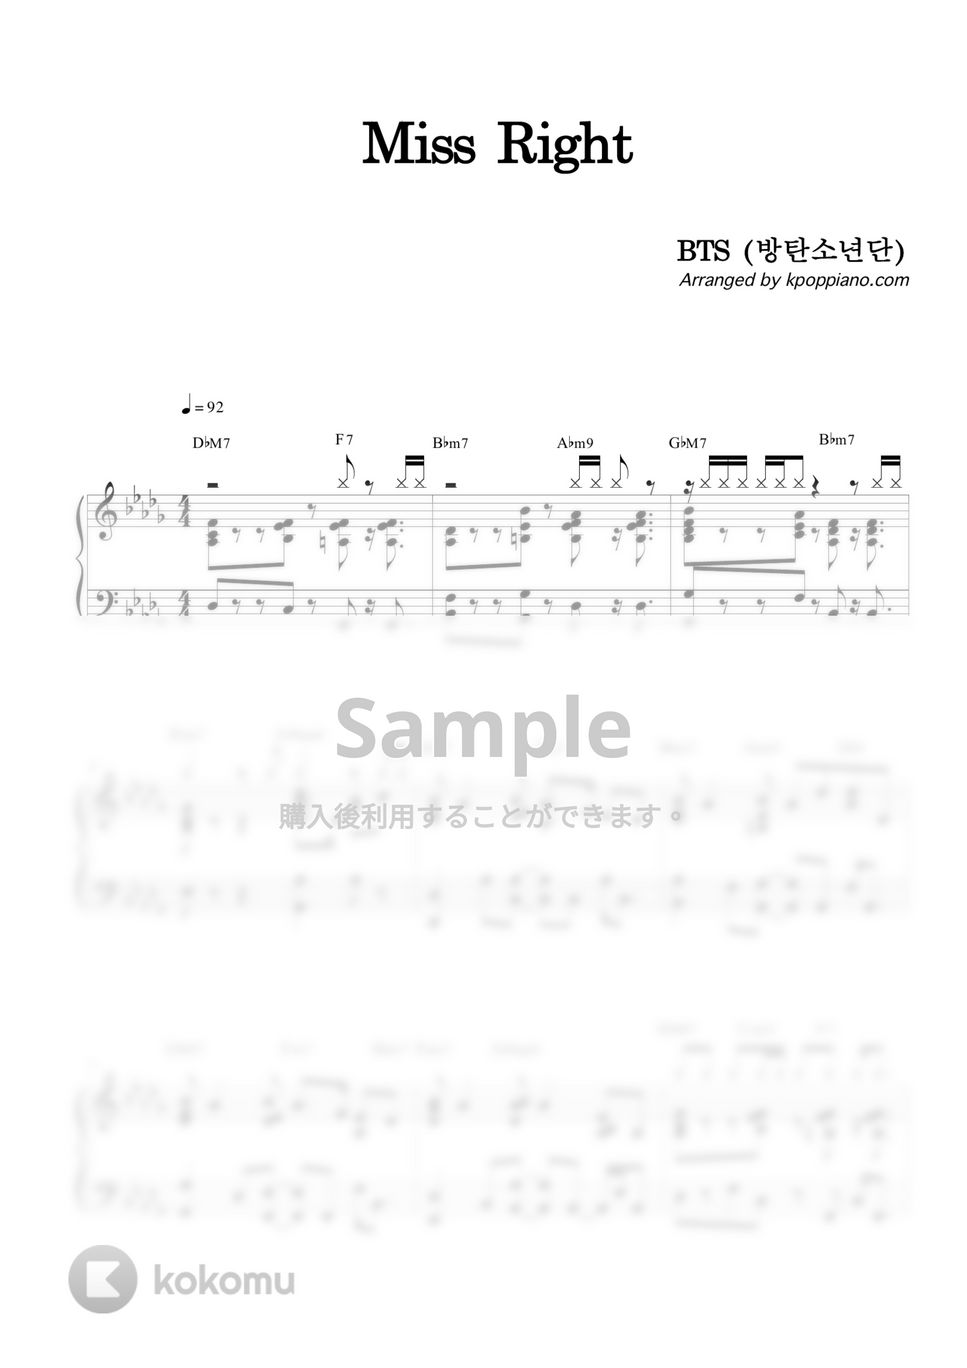 防弾少年団 (BTS) - Miss Right by KPOP PIANO